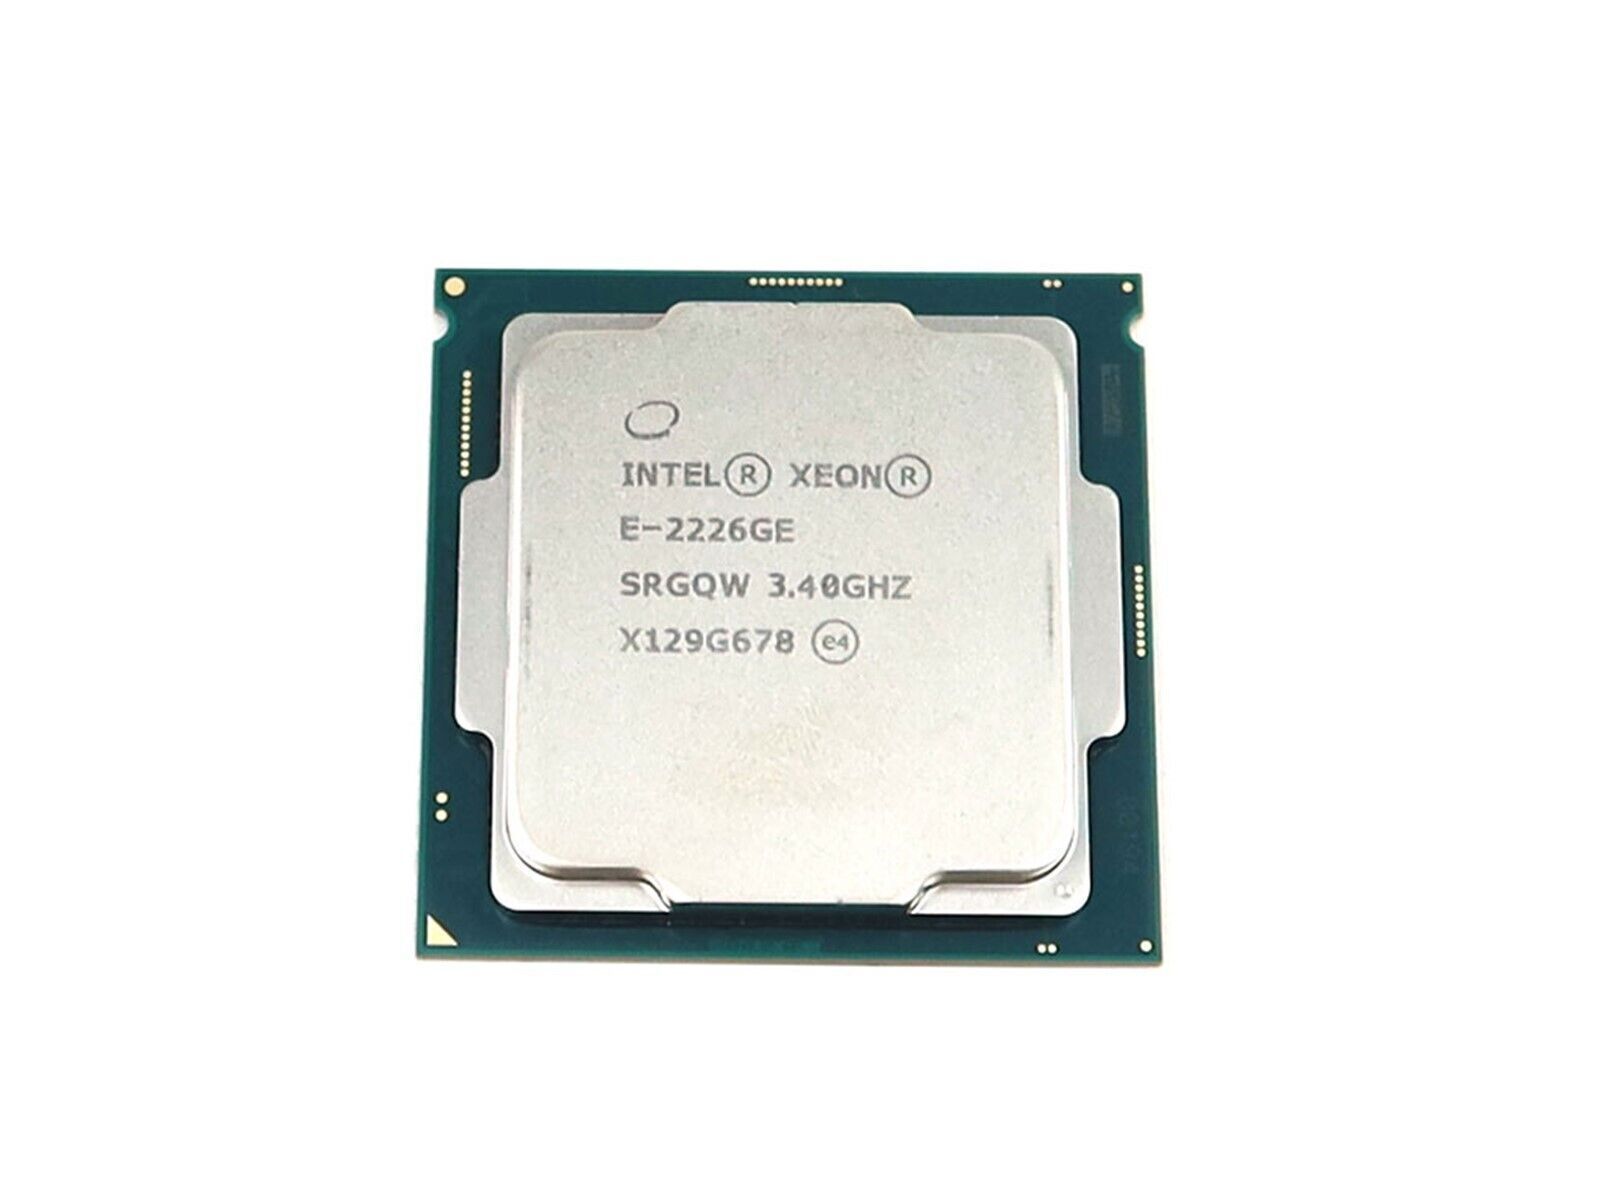 Intel Xeon E-2226GE 3.4GHZ Socket LGA1151 Hexa-Core Server CPU Processor SRGQW